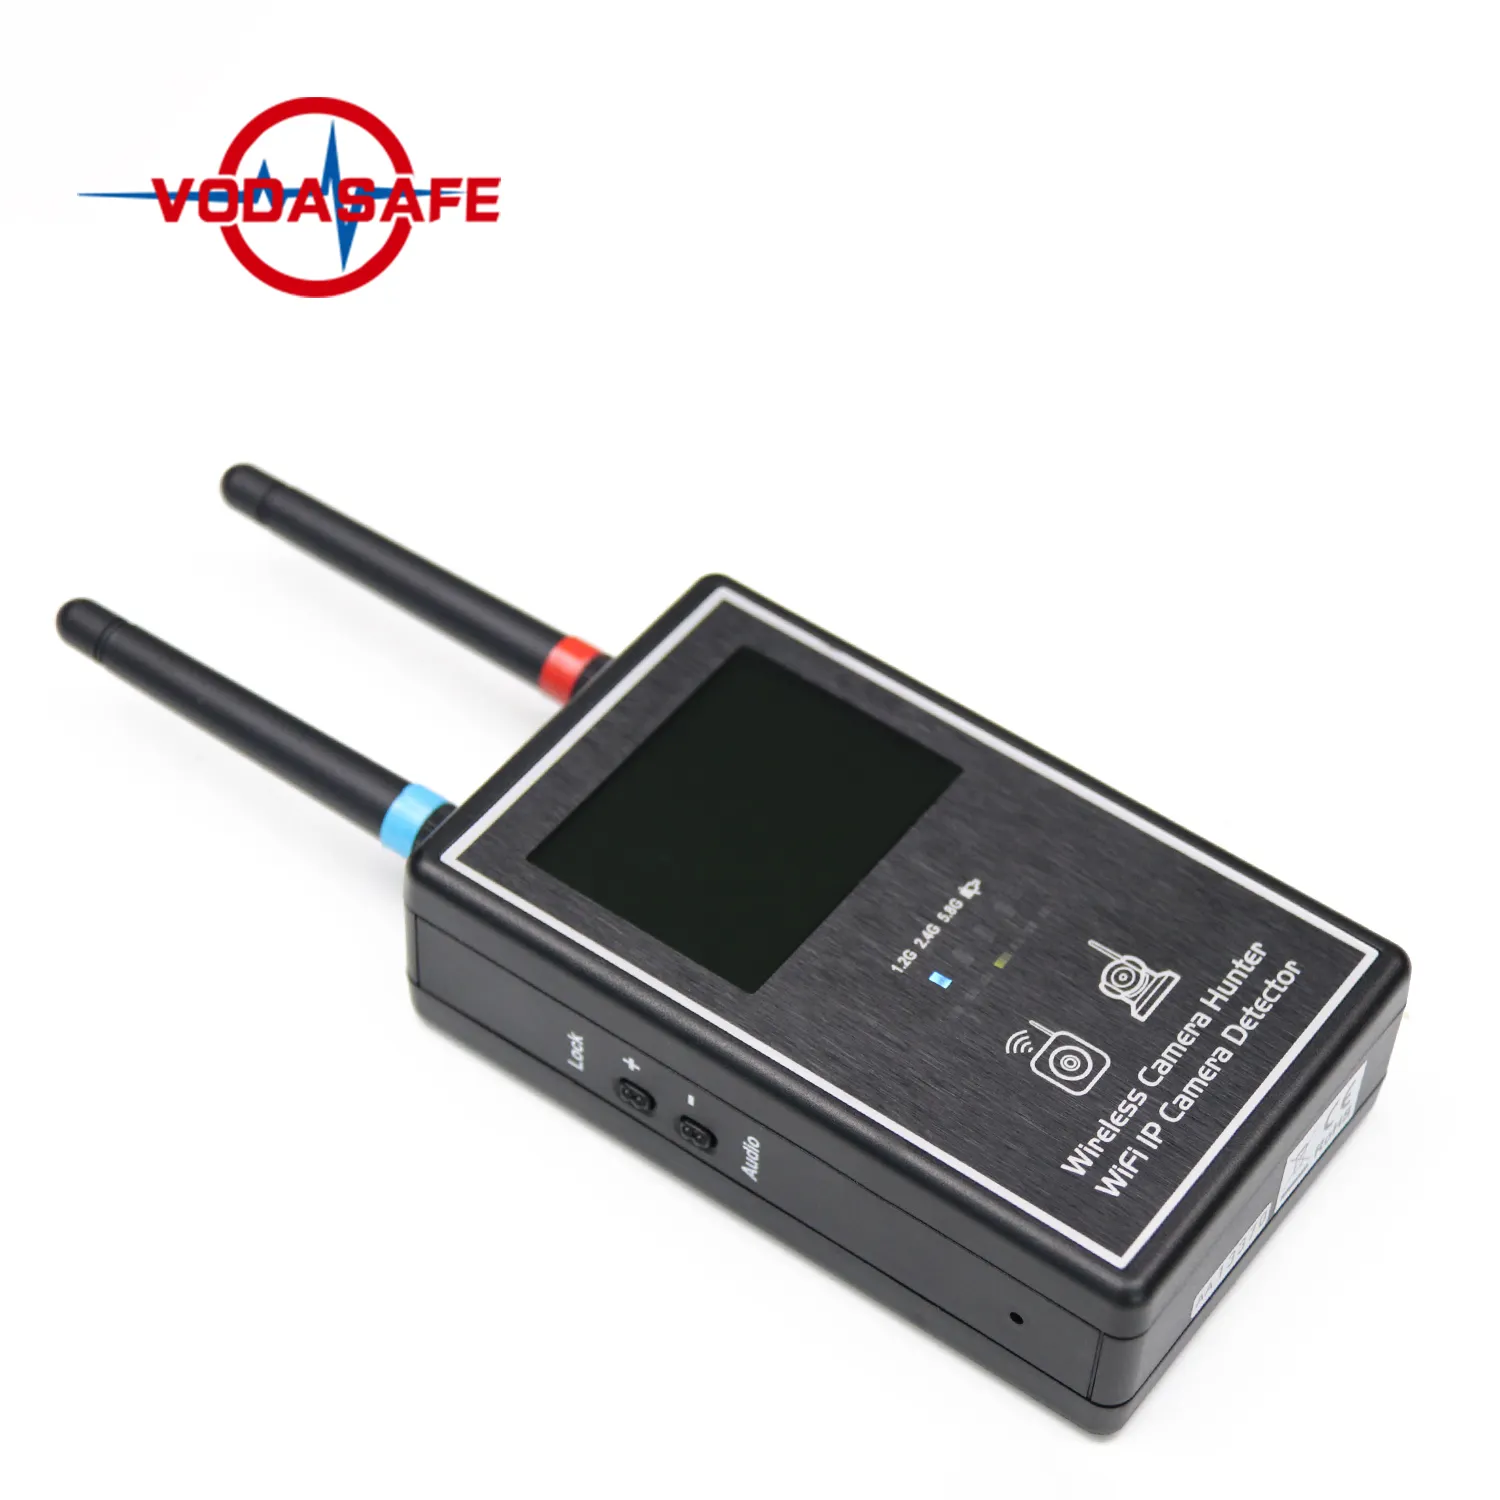 Vodasafe Professional Full Band Wireless Camera Detector WiFi Camera Scanner